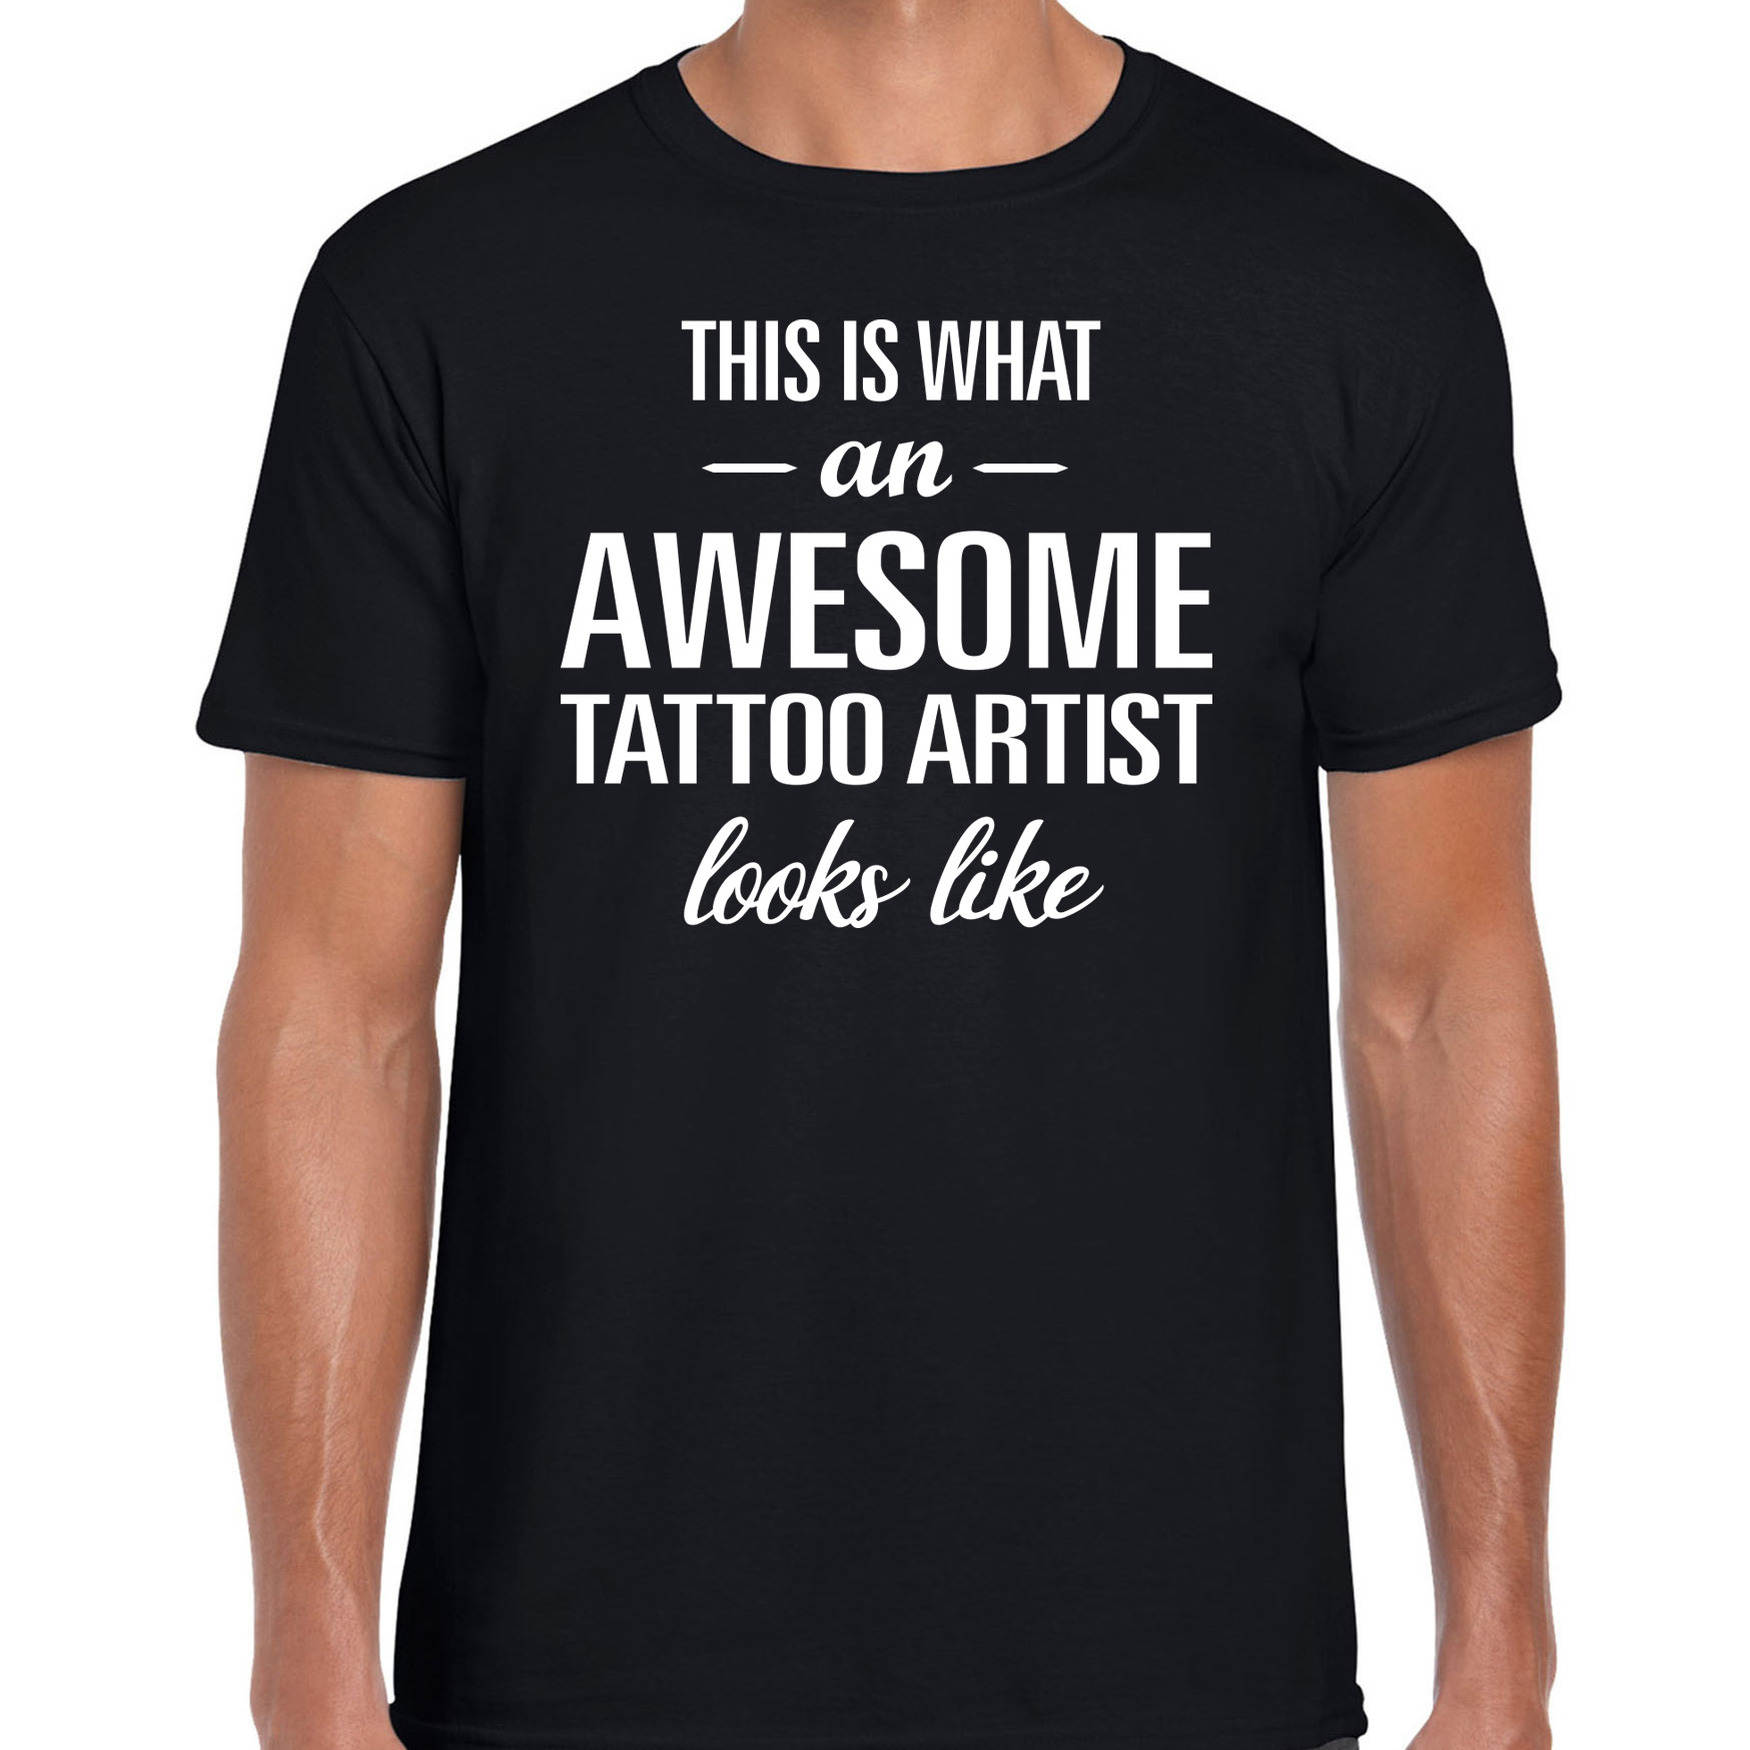 Awesome tattoo artist / geweldige tattoo artiest cadeau t-shirt zwart voor heren Top Merken Winkel